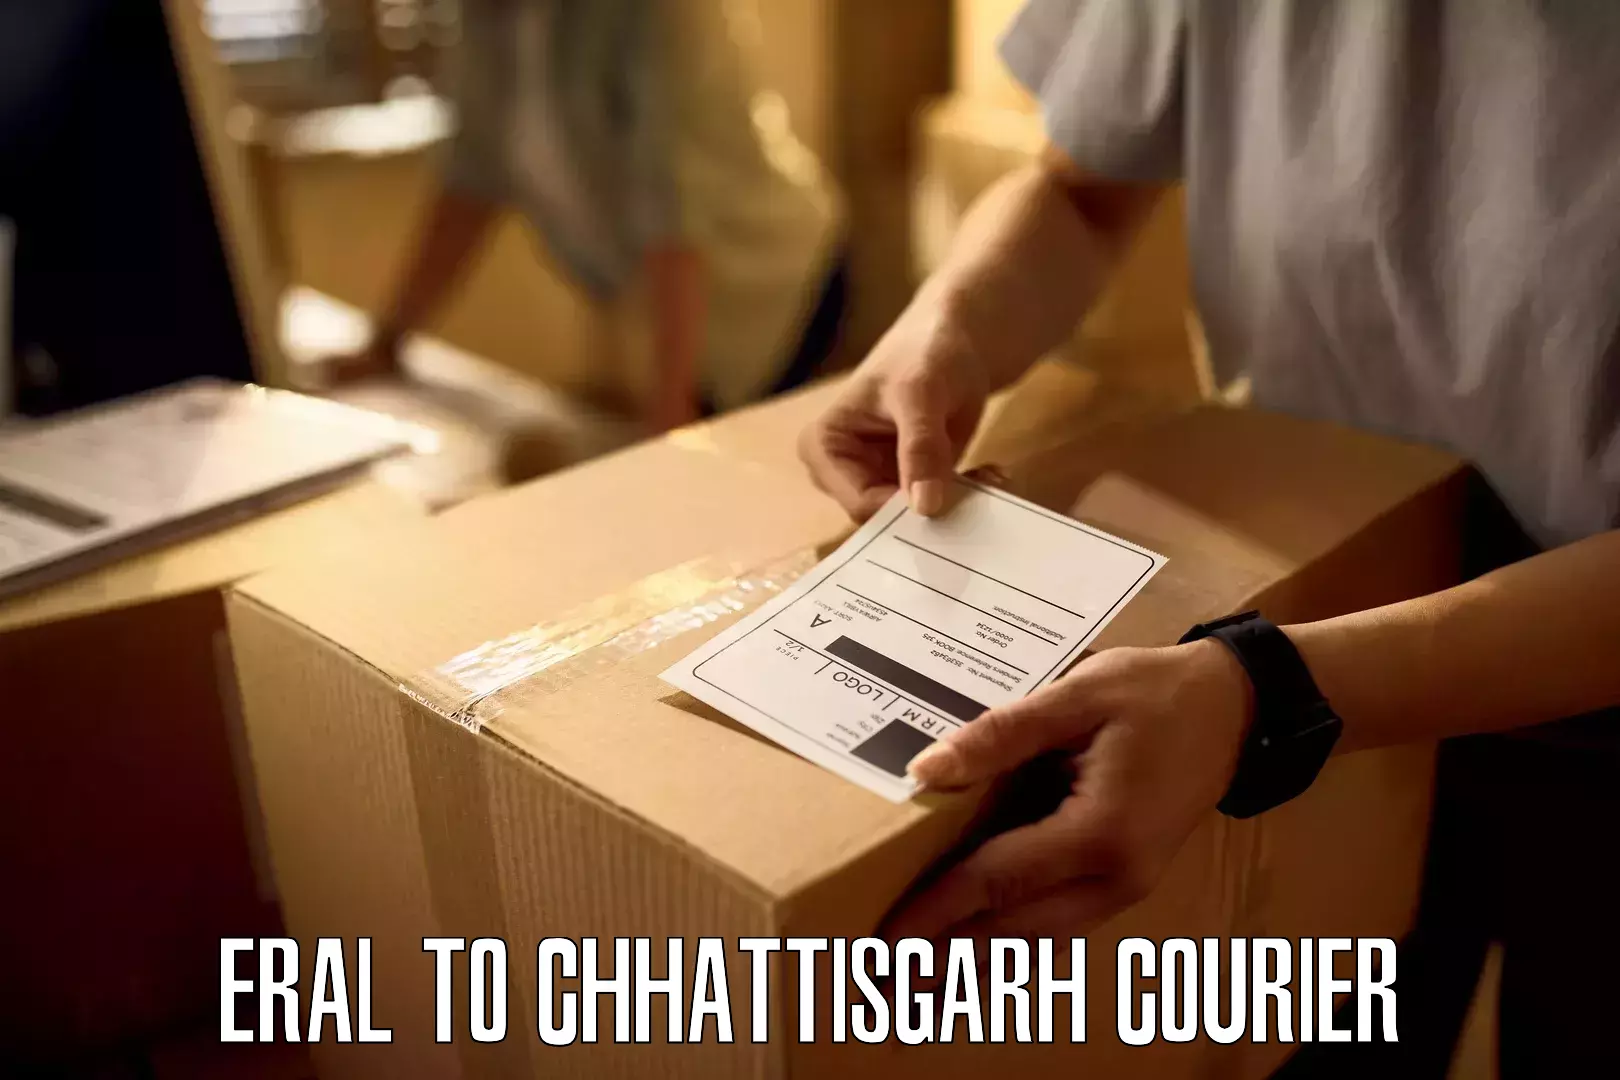 Professional courier services Eral to Korea Chhattisgarh